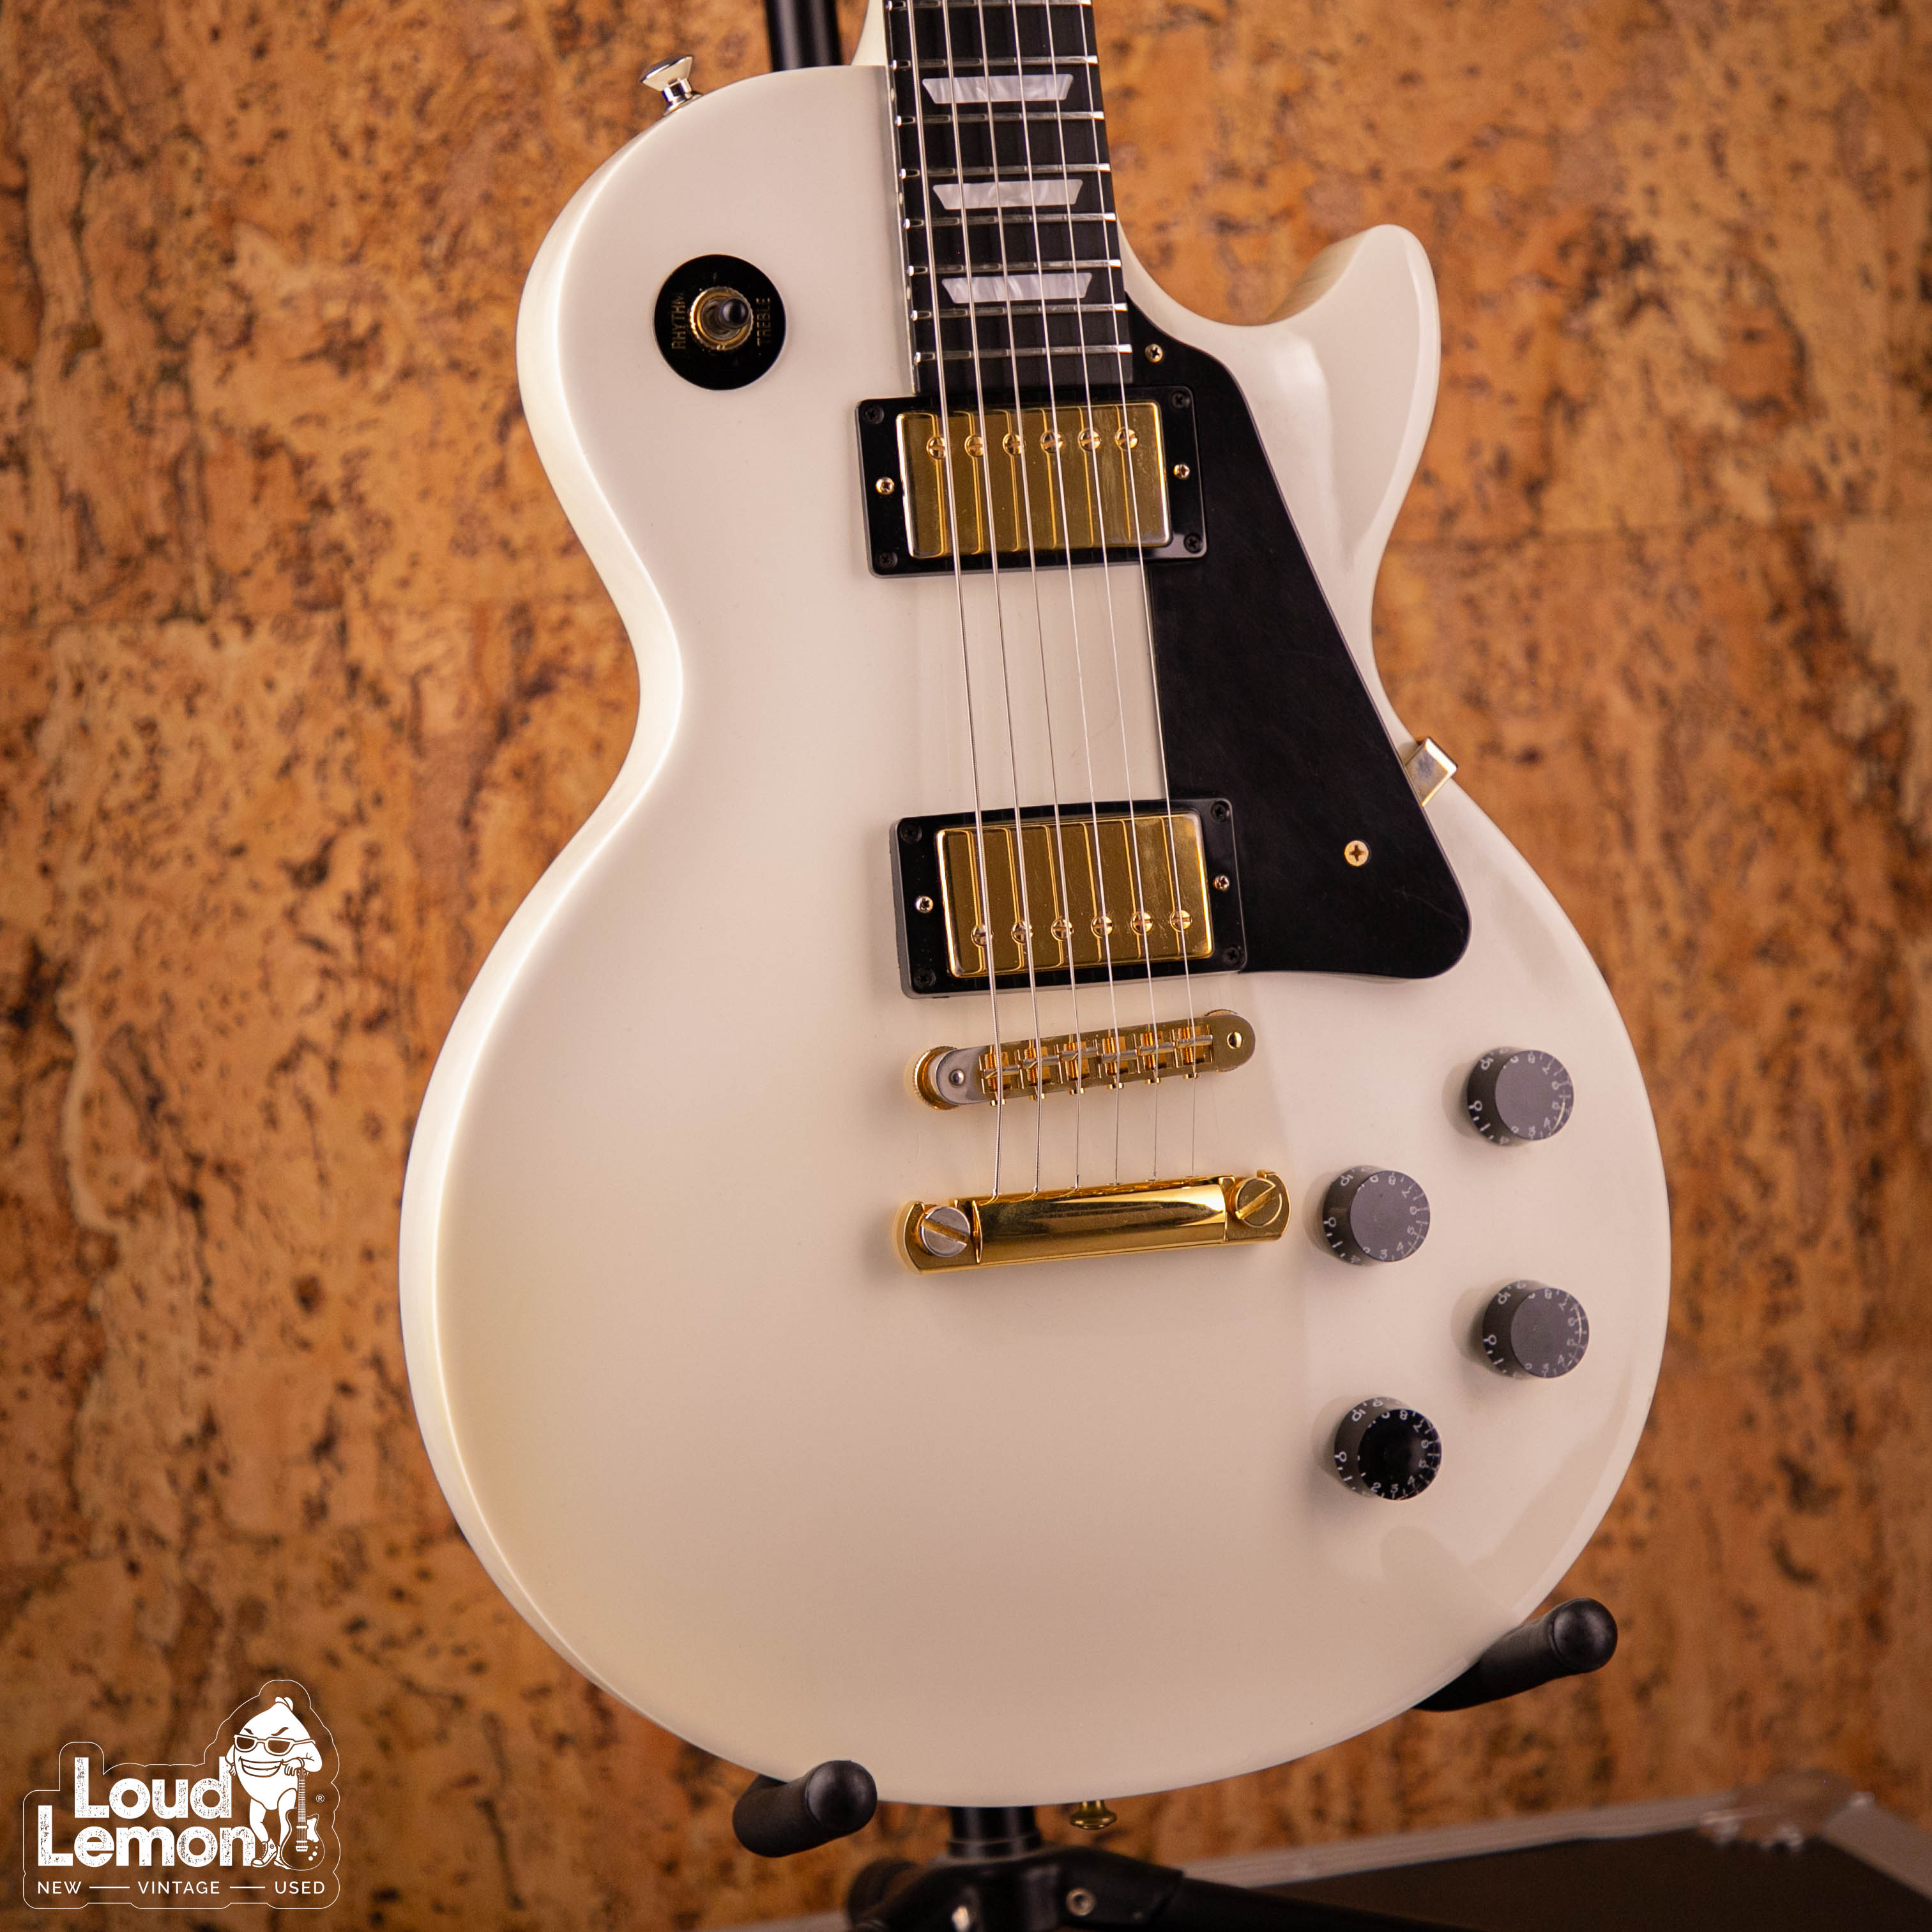 Gibson Les Paul Studio Alpine White 2006 USA электрогитара — купить в  магазине винтажных гитар | Loud Lemon